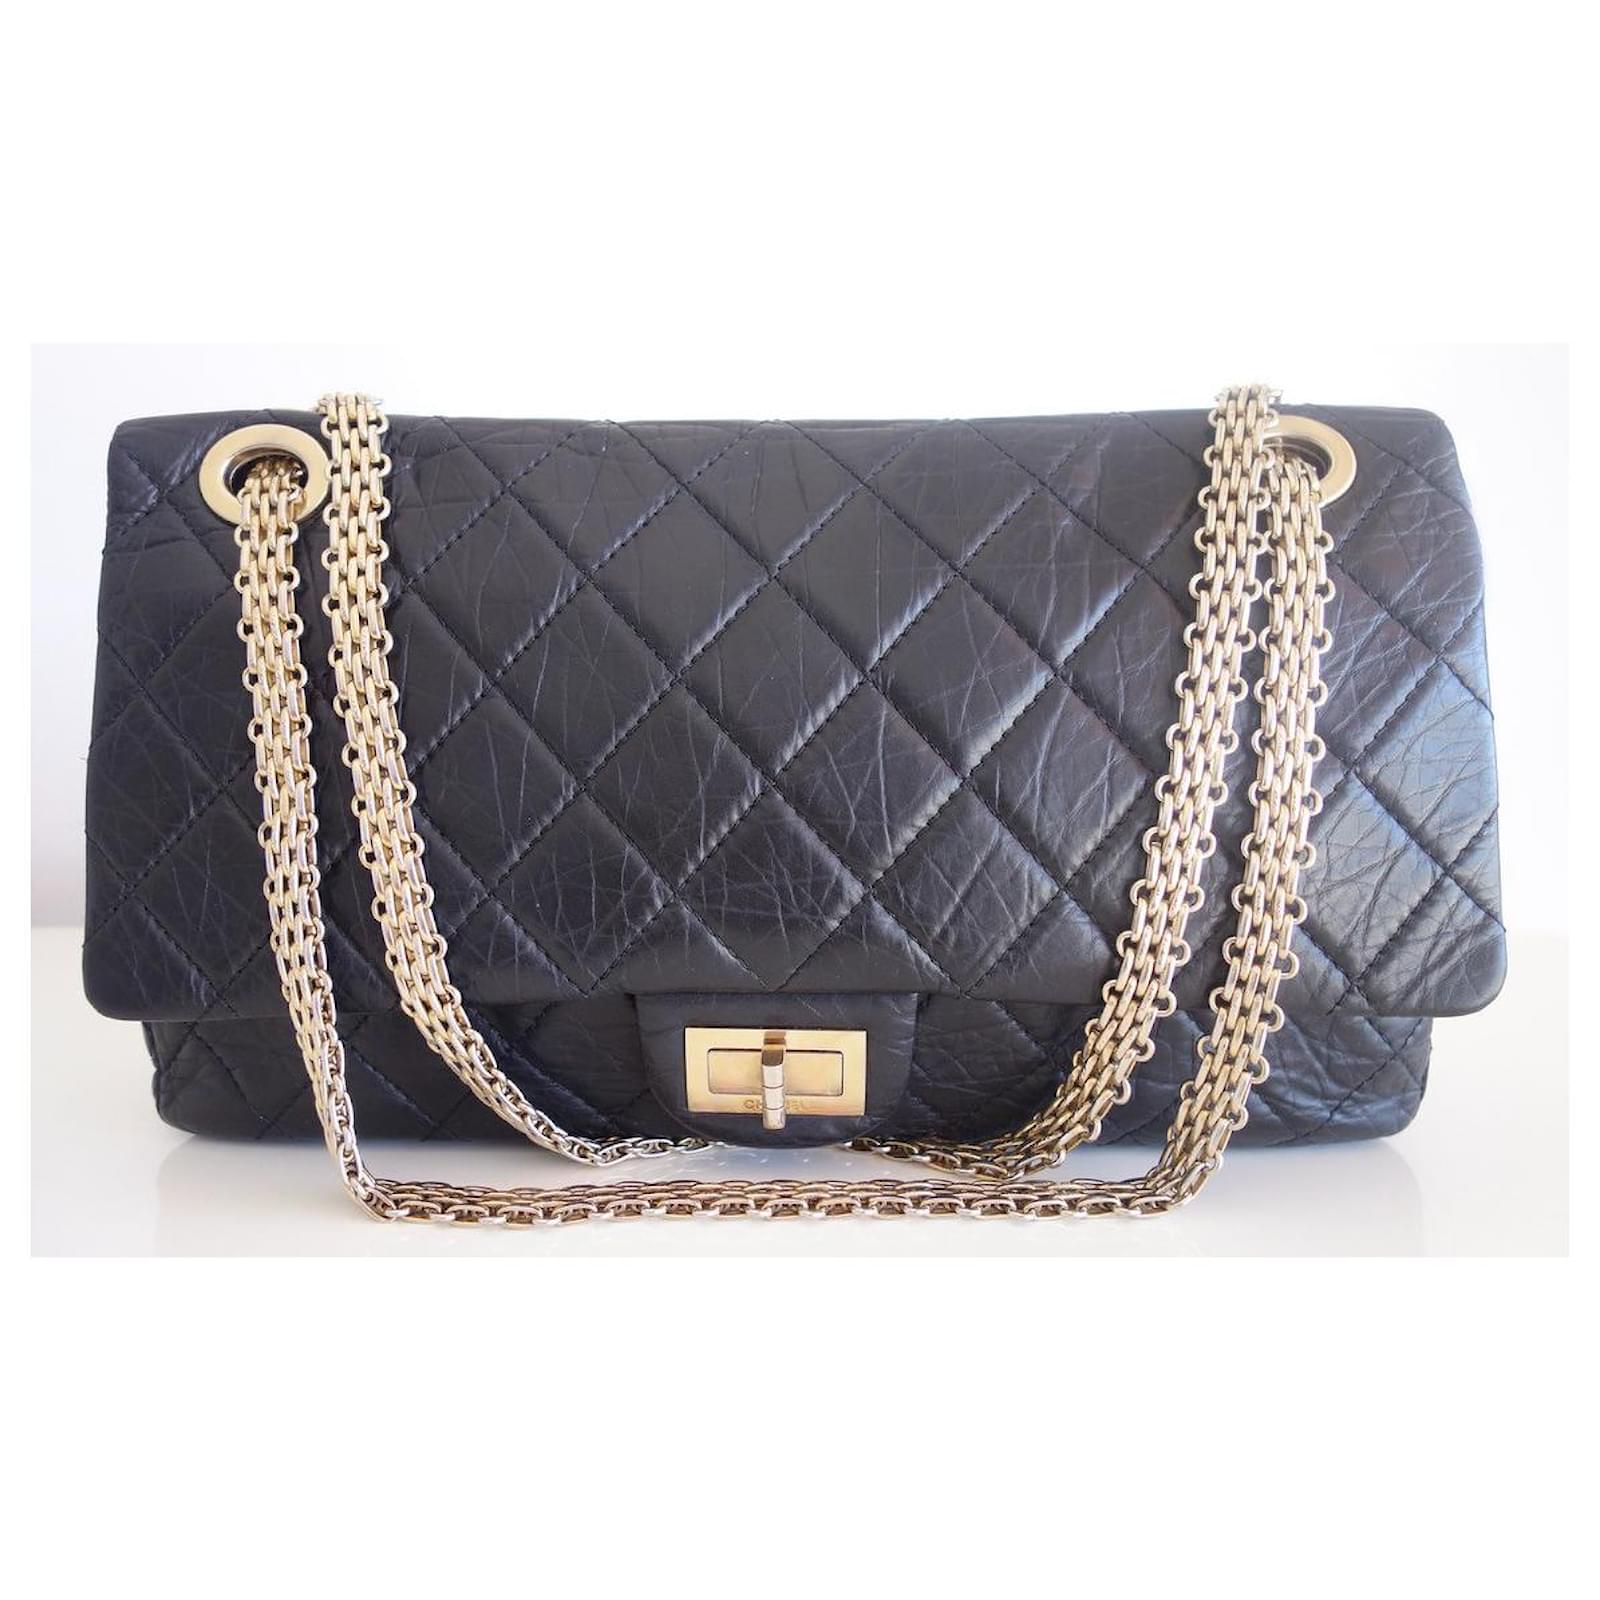 Handbags Chanel Chanel Bag 2.55 GMT